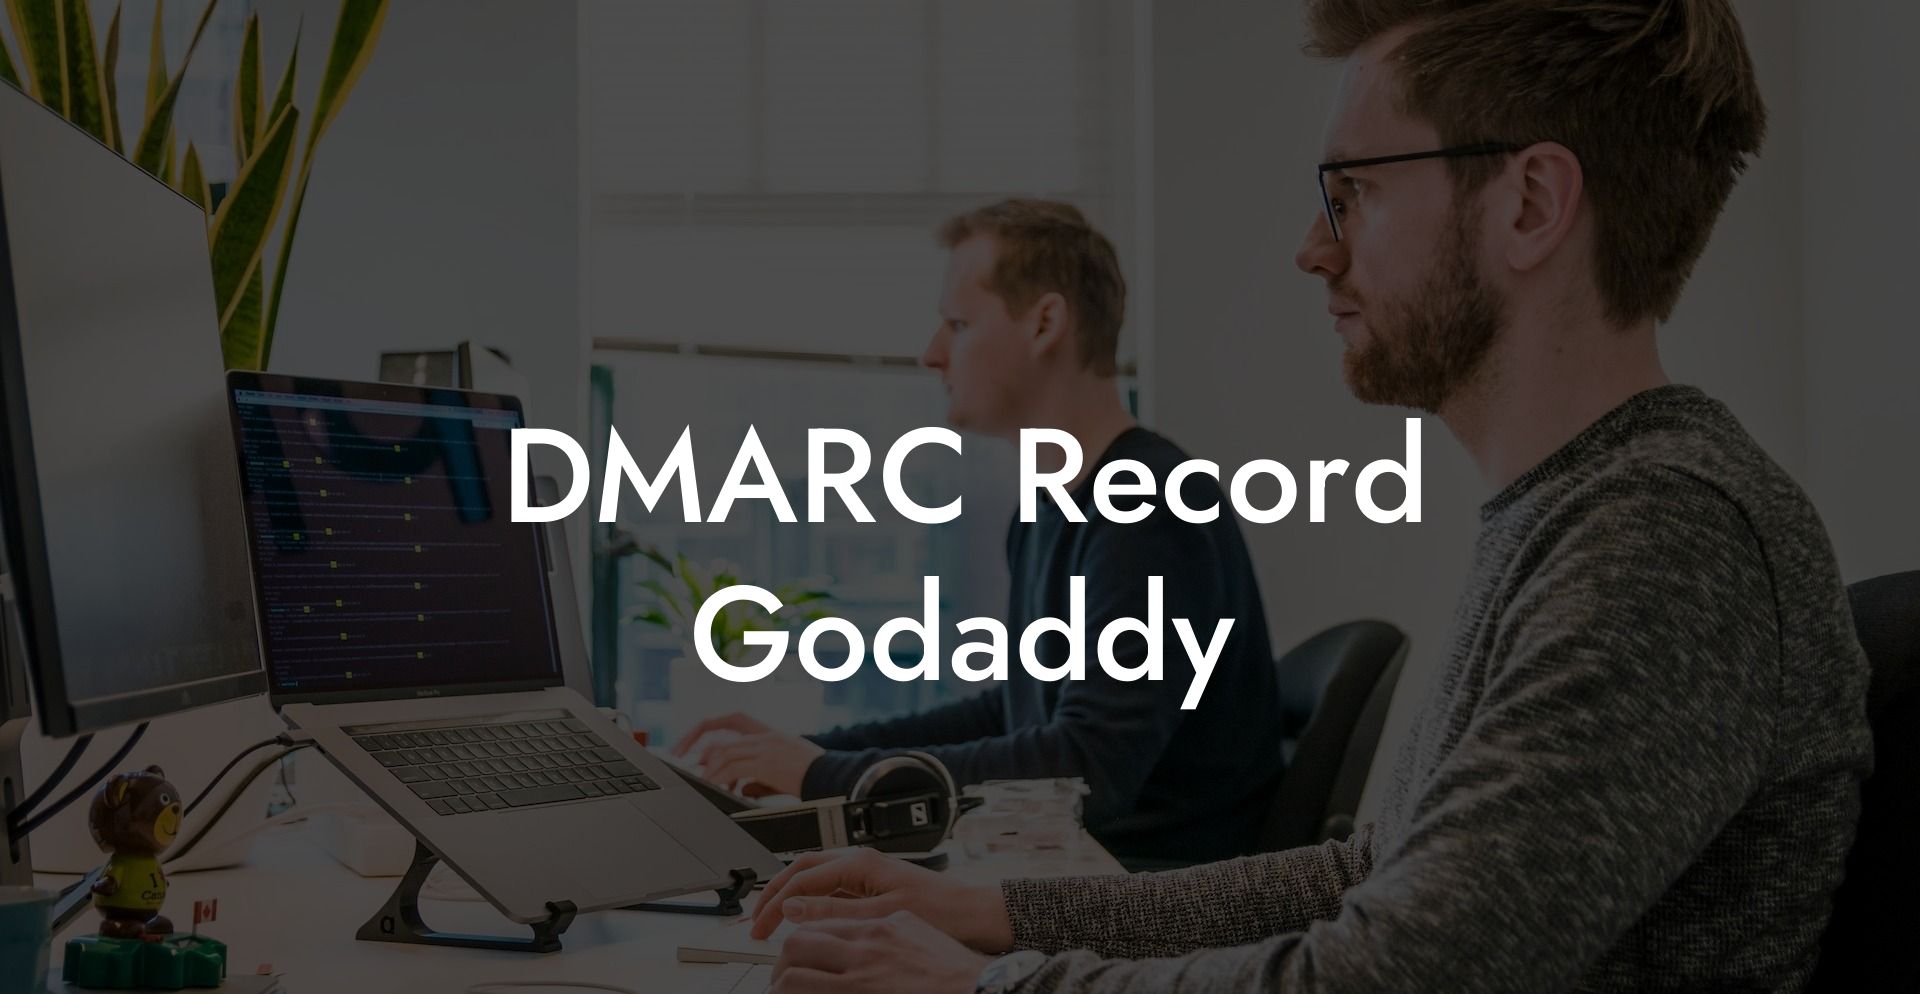 DMARC Record Godaddy